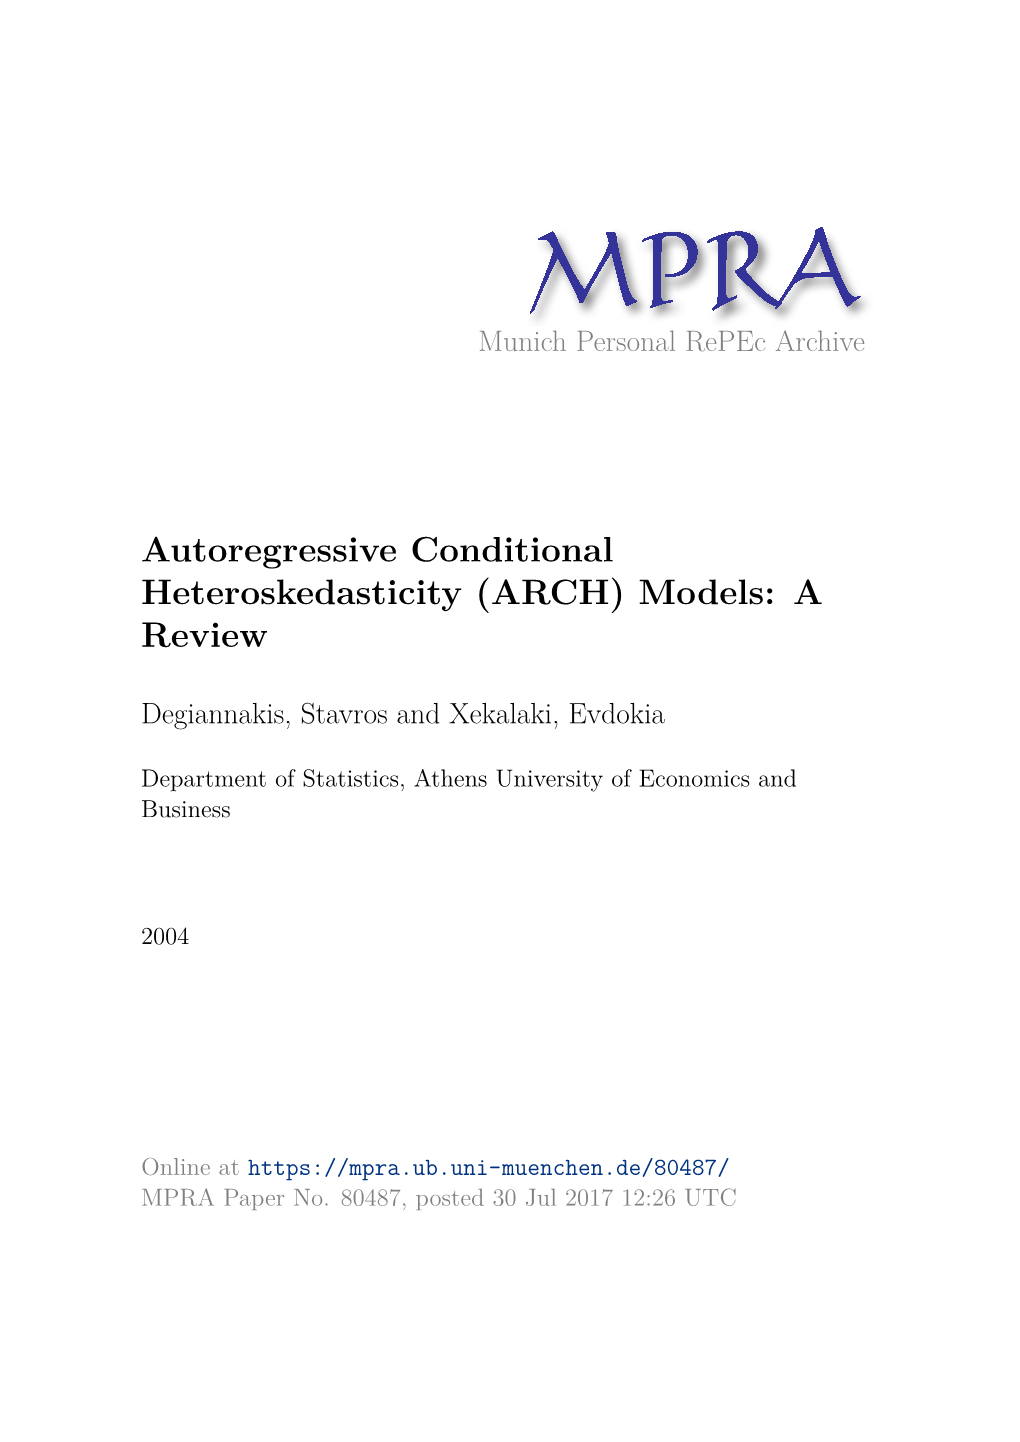 Autoregressive Conditional Heteroskedasticity (ARCH) Models: a Review